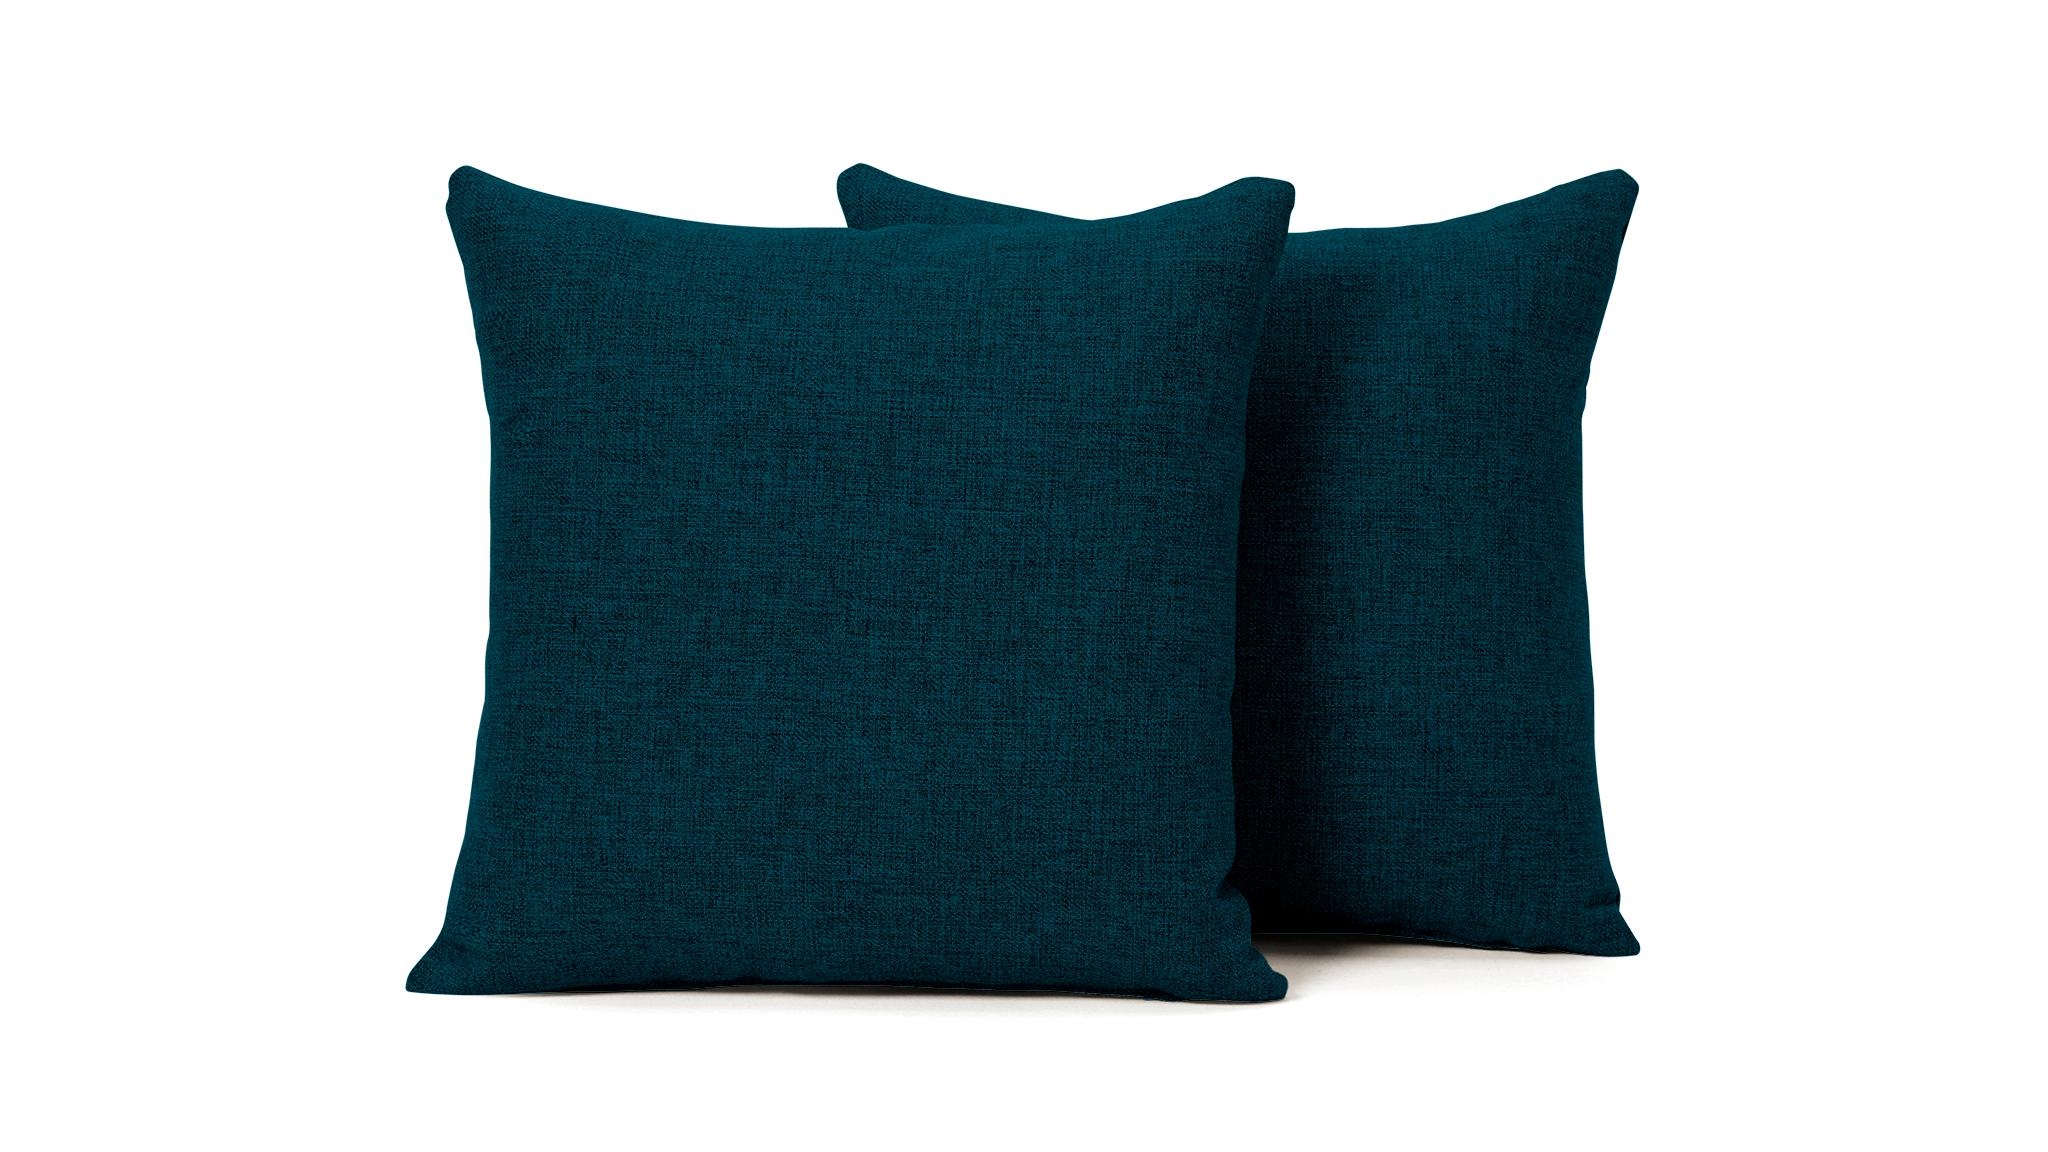 Blue Decorative Mid Century Modern Knife Edge Pillows 18 x 18 (Set of 2) - Key Largo Zenith Teal - Image 0